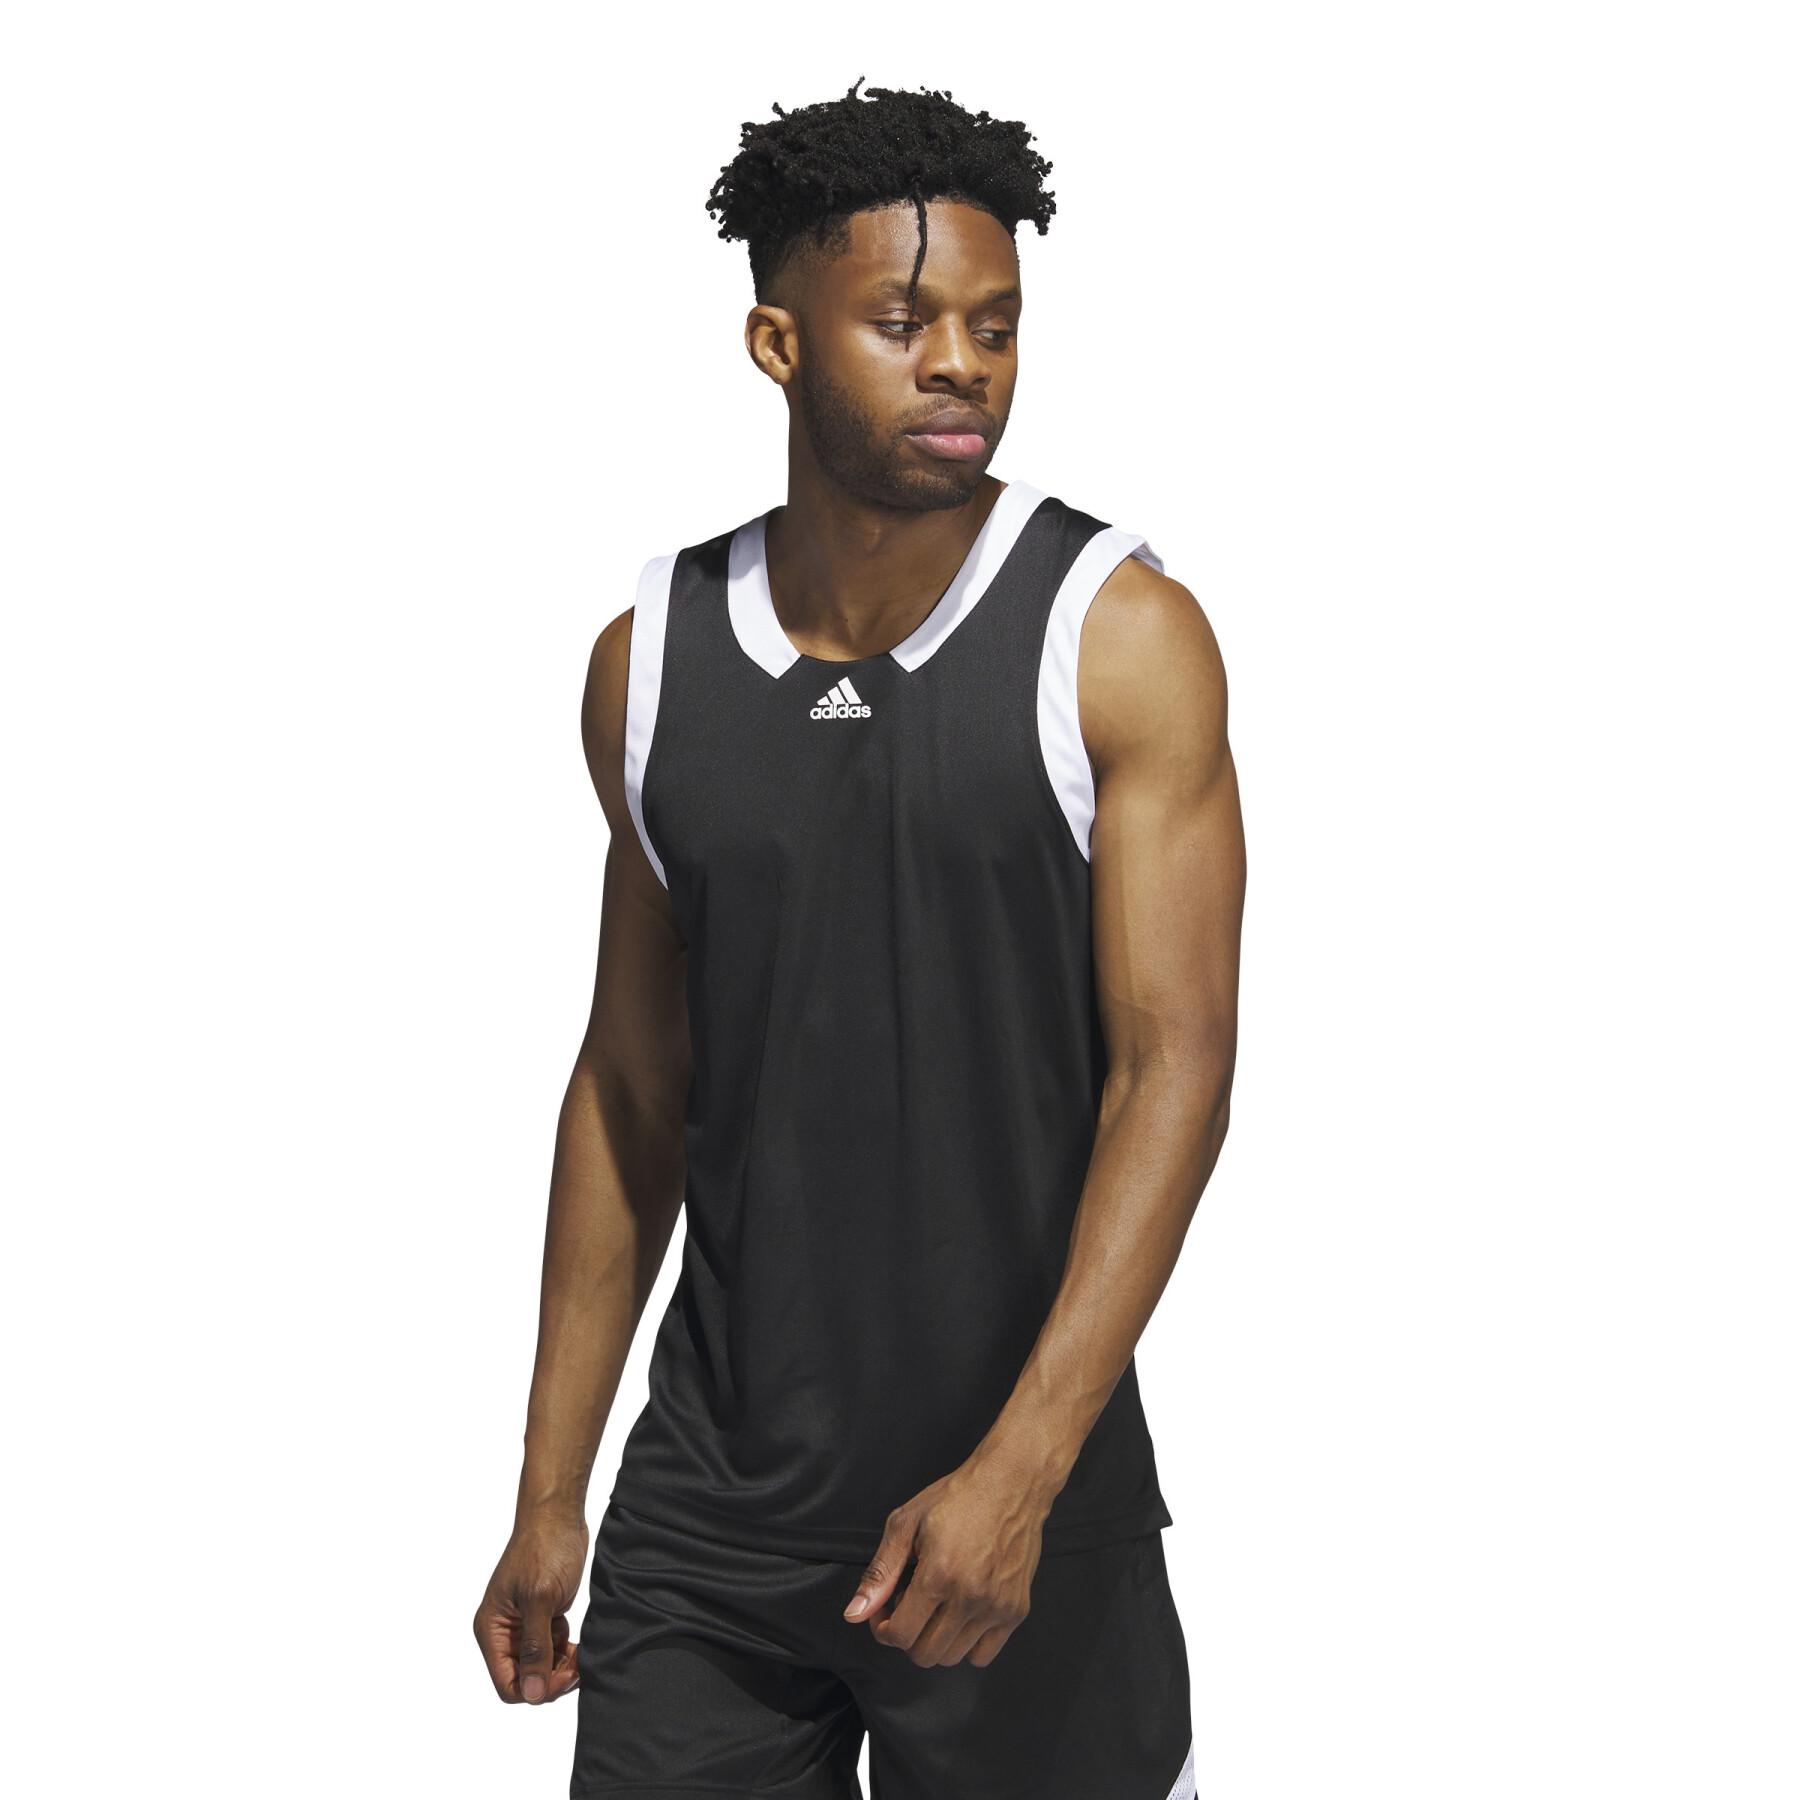 Icon - Squad adidas - Basketball Jersey Jerseys - Categories wear